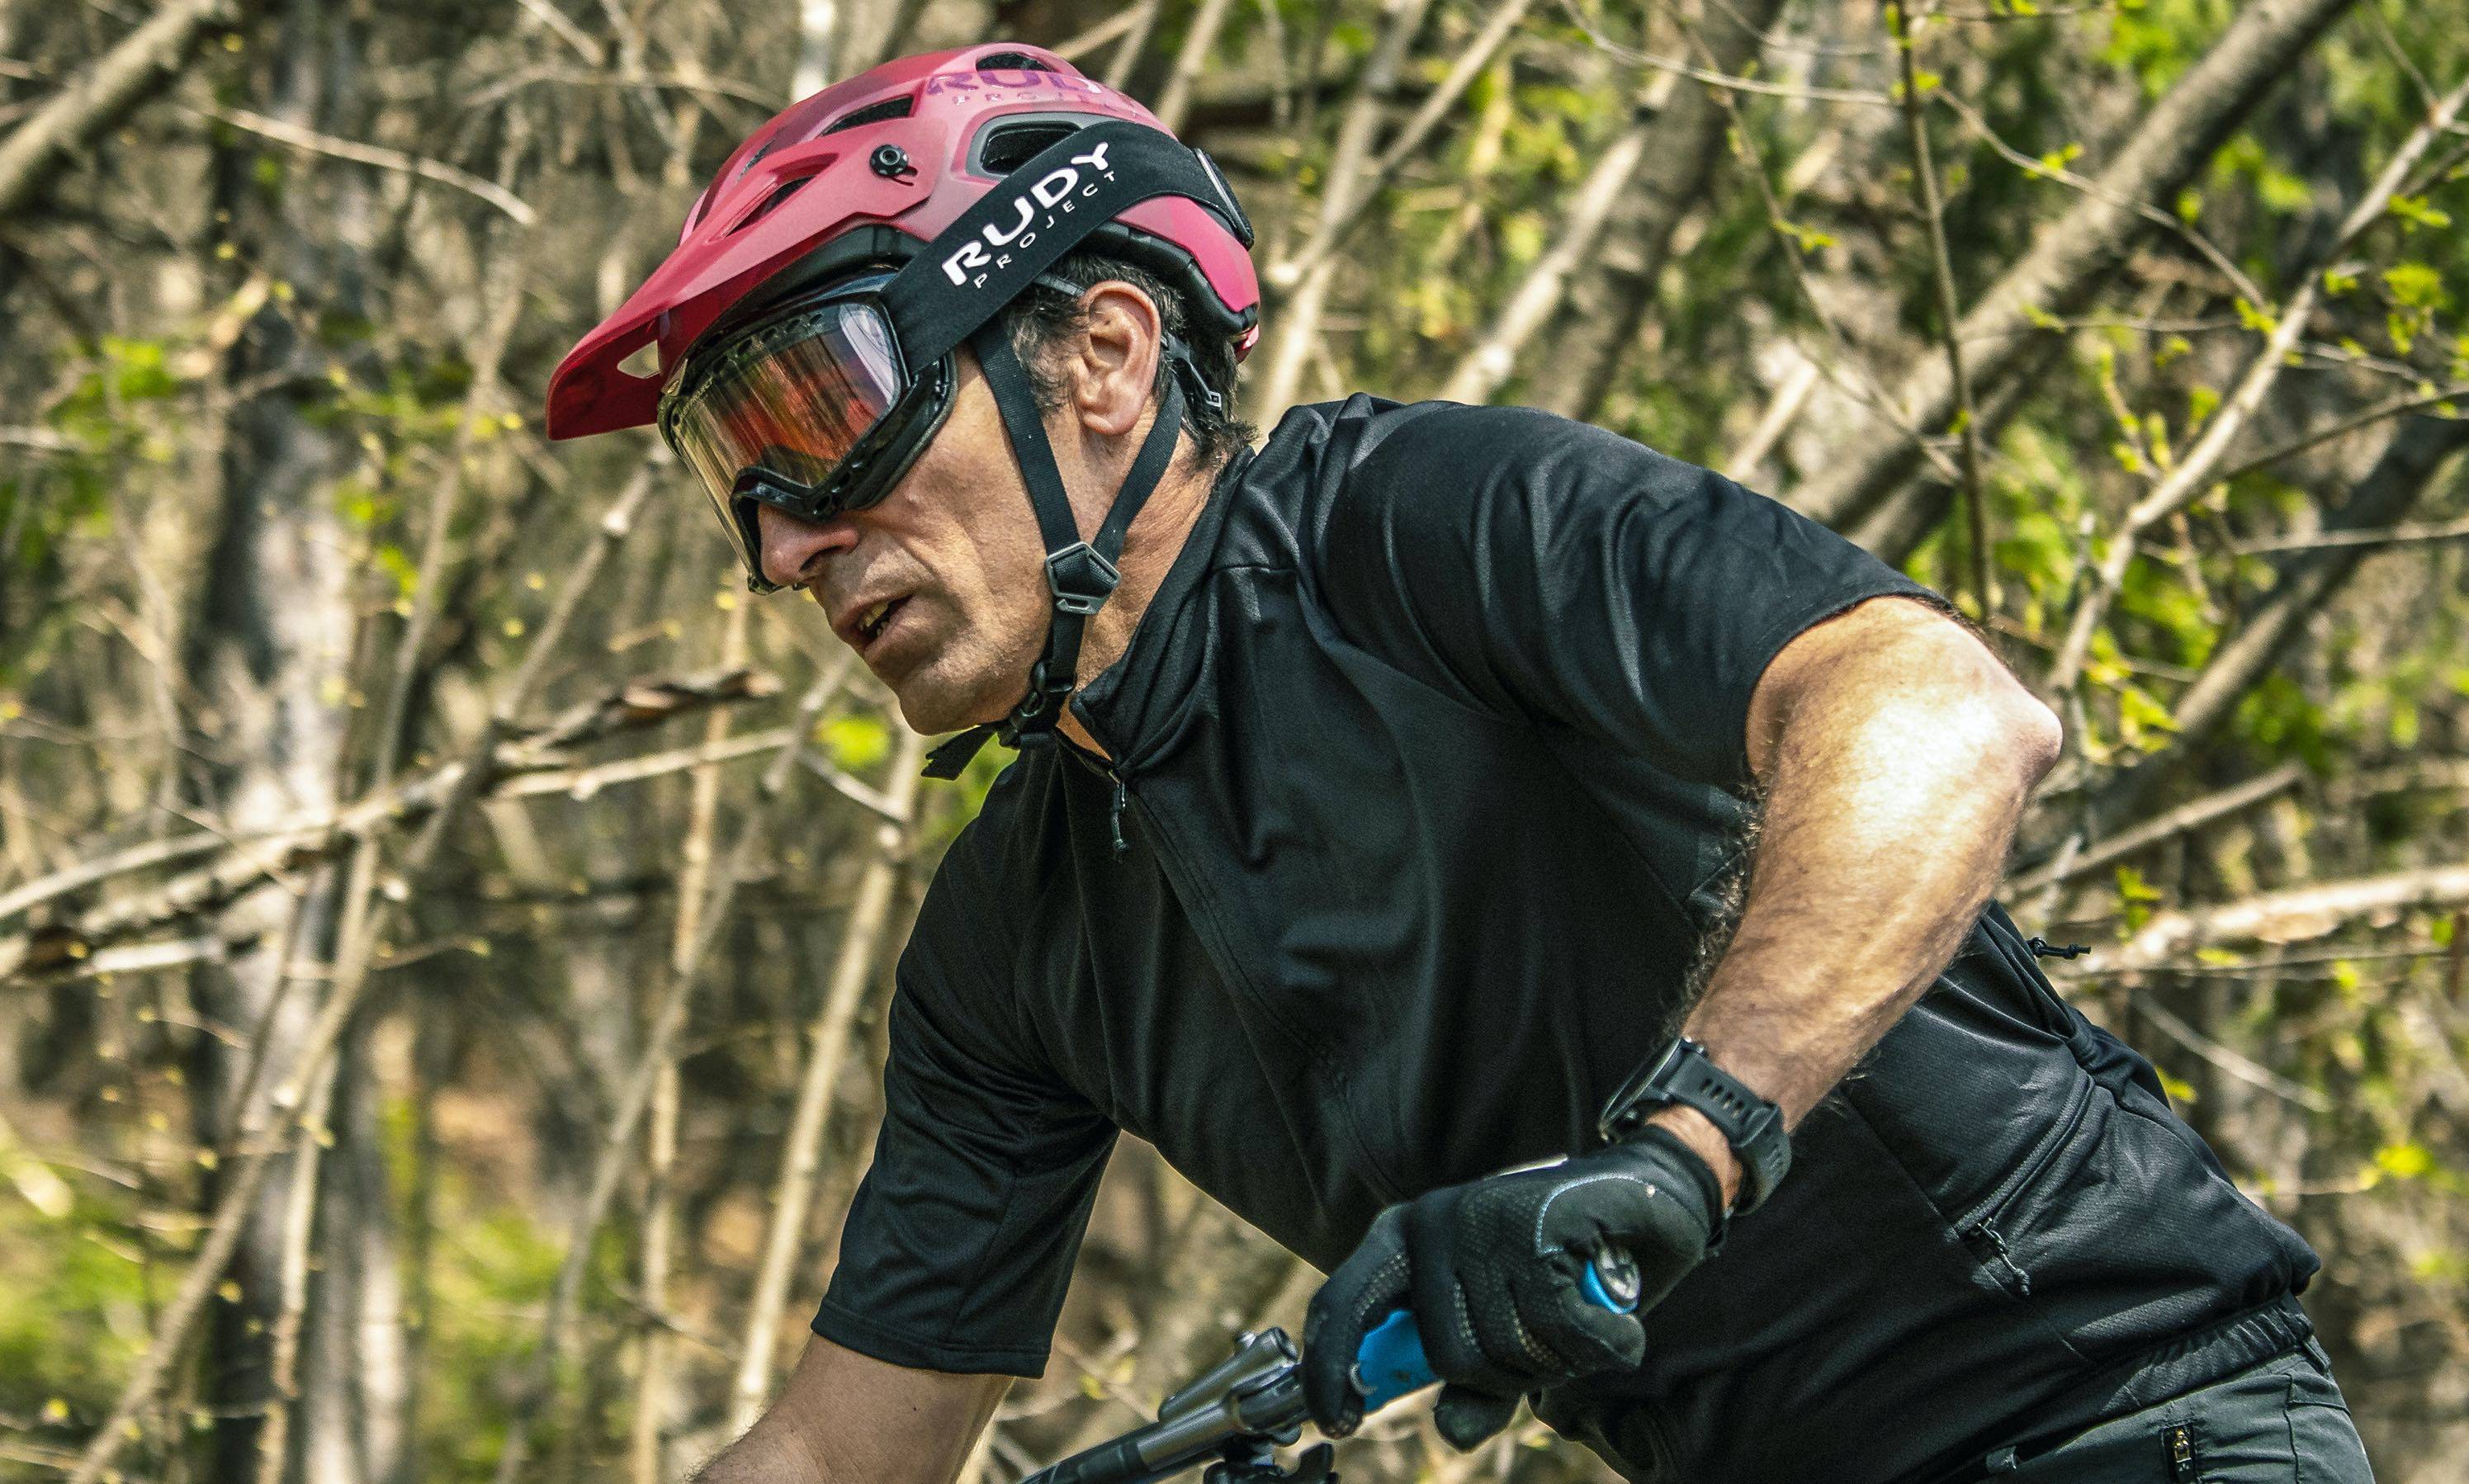 Sunglasses Mountain Bike Cycling Helmet Sun Glasses Biking Black White Red MTB 